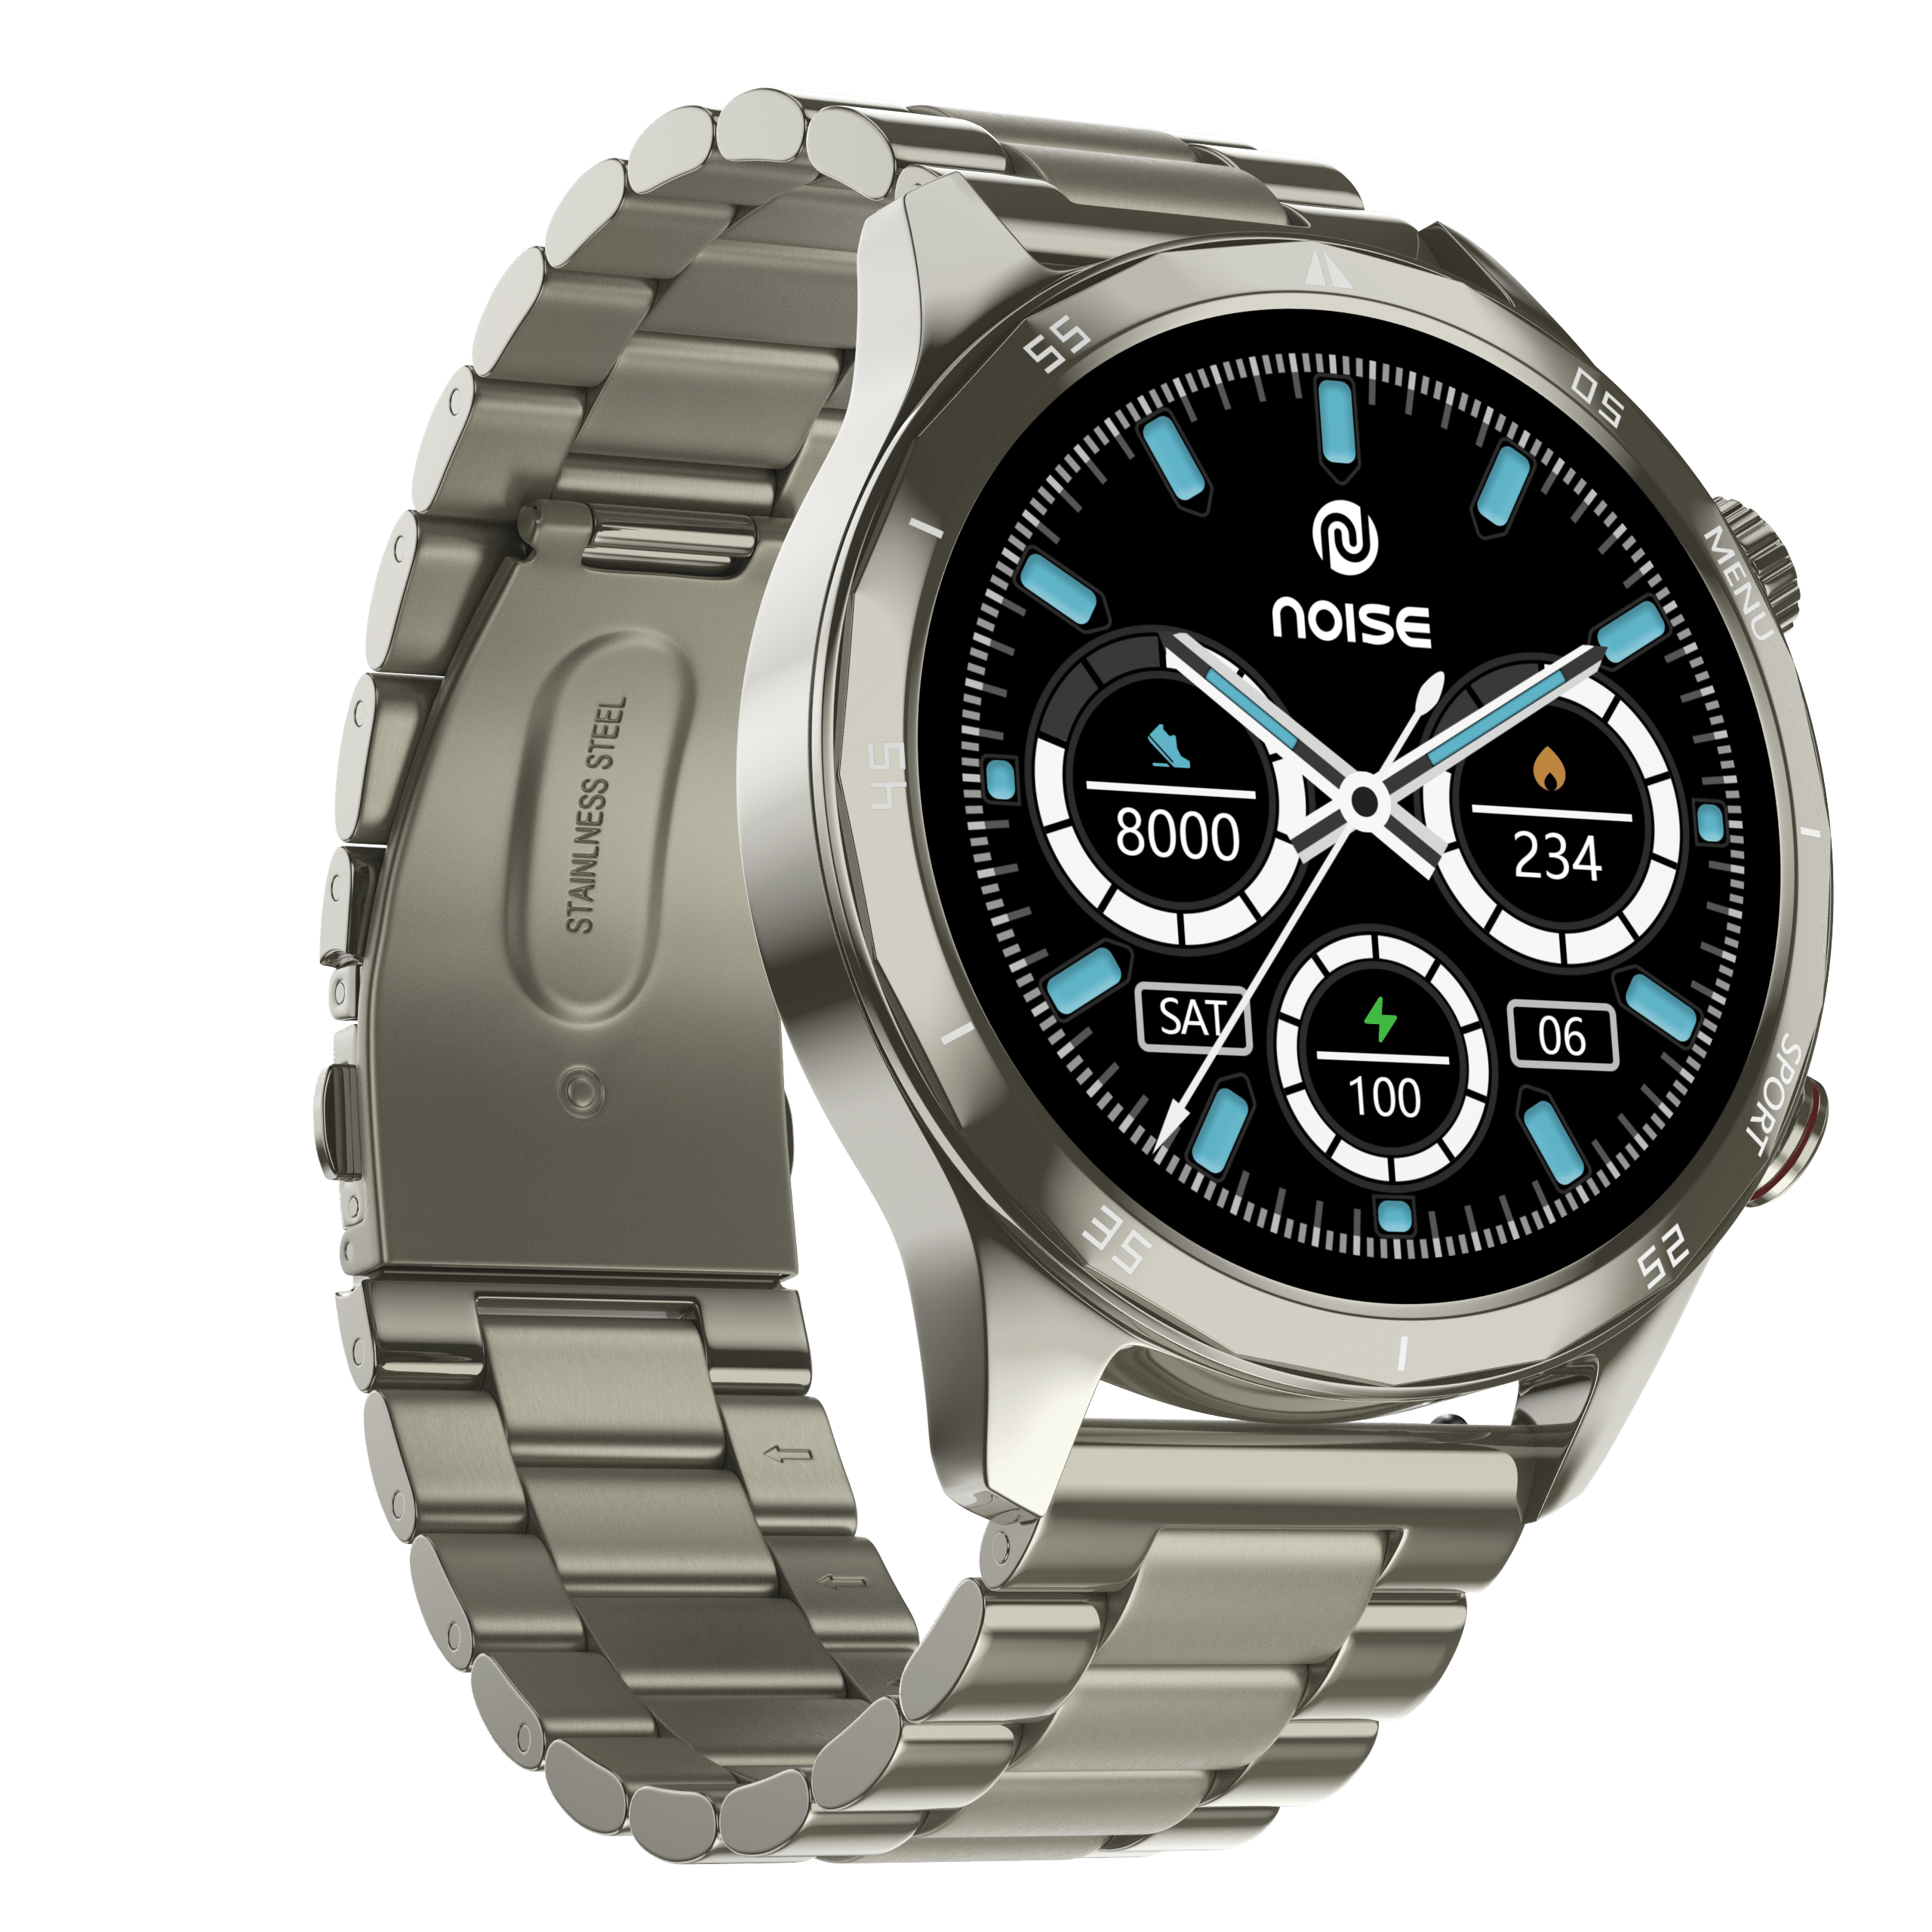 NoiseFit Metallix Smartwatch Price 